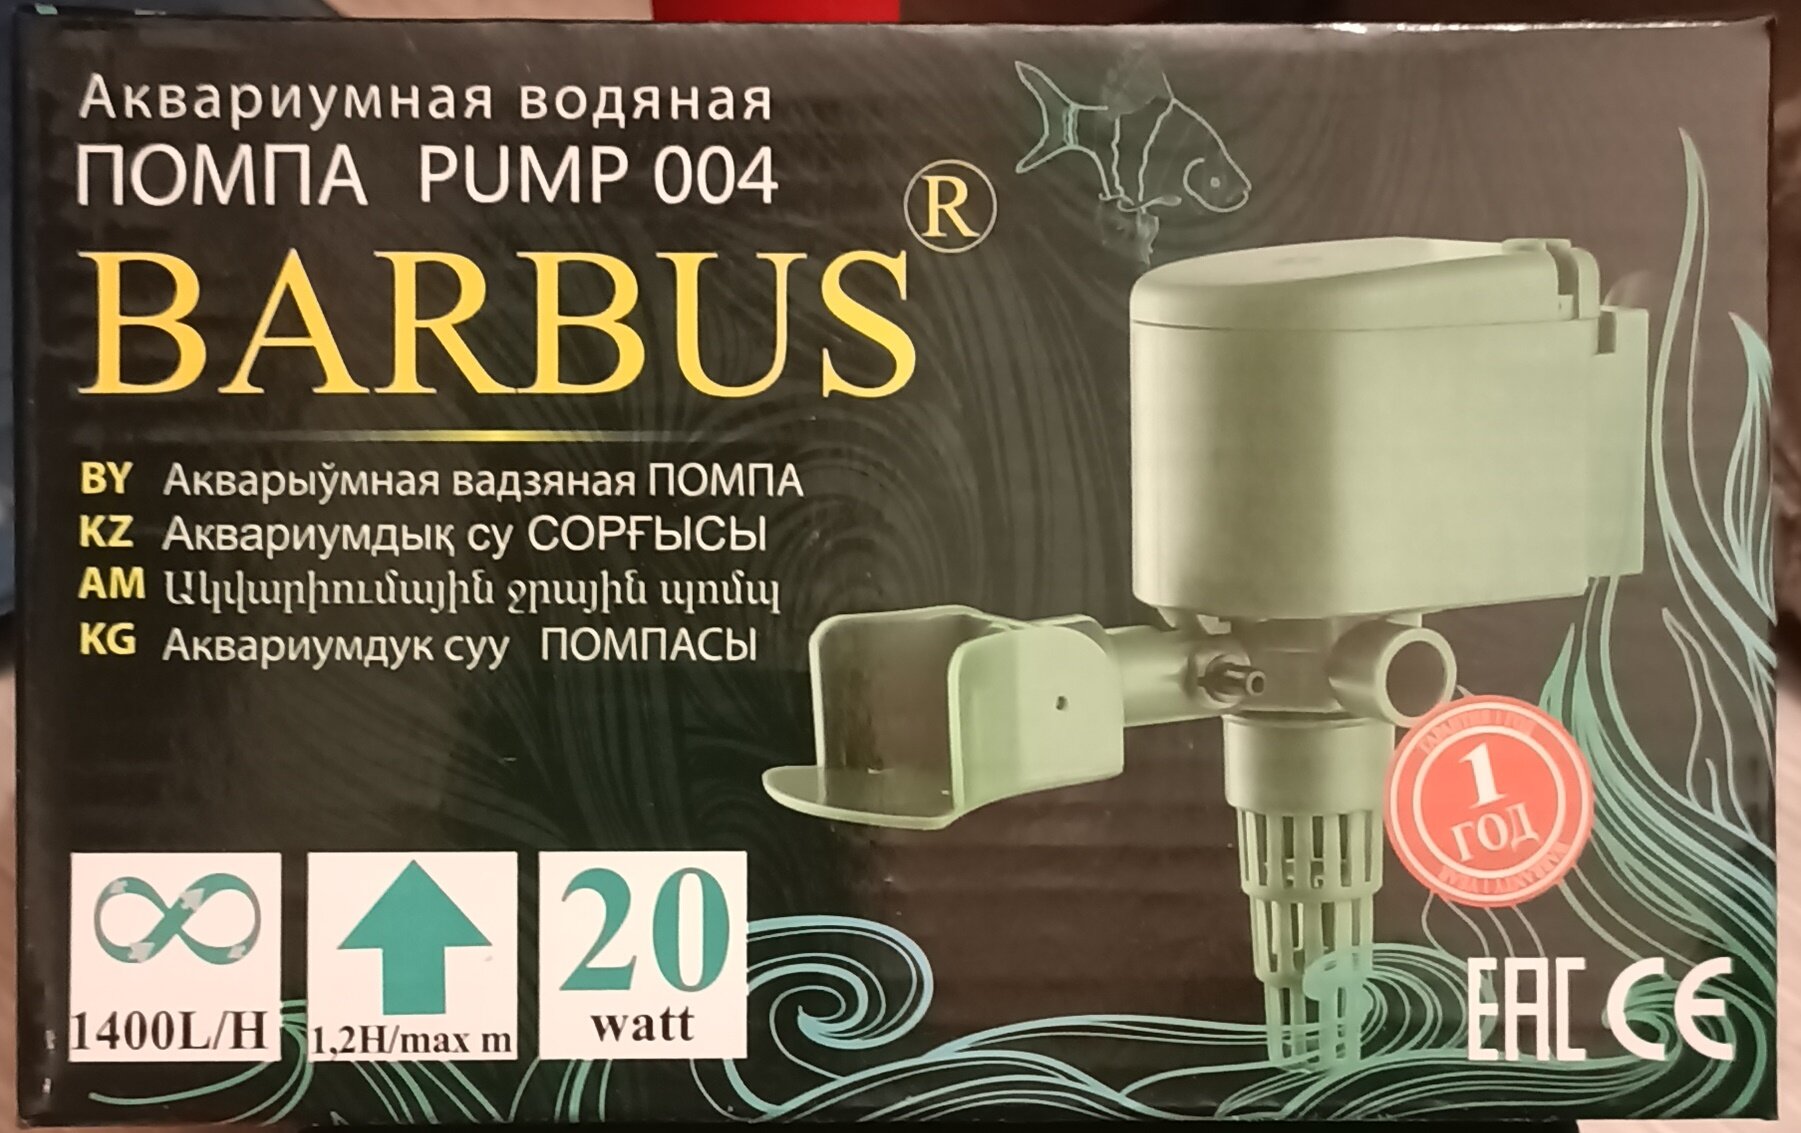 Помпа водяная BARBUS PUMP 004 20watt 1400 л/ч, глубина 1,2м